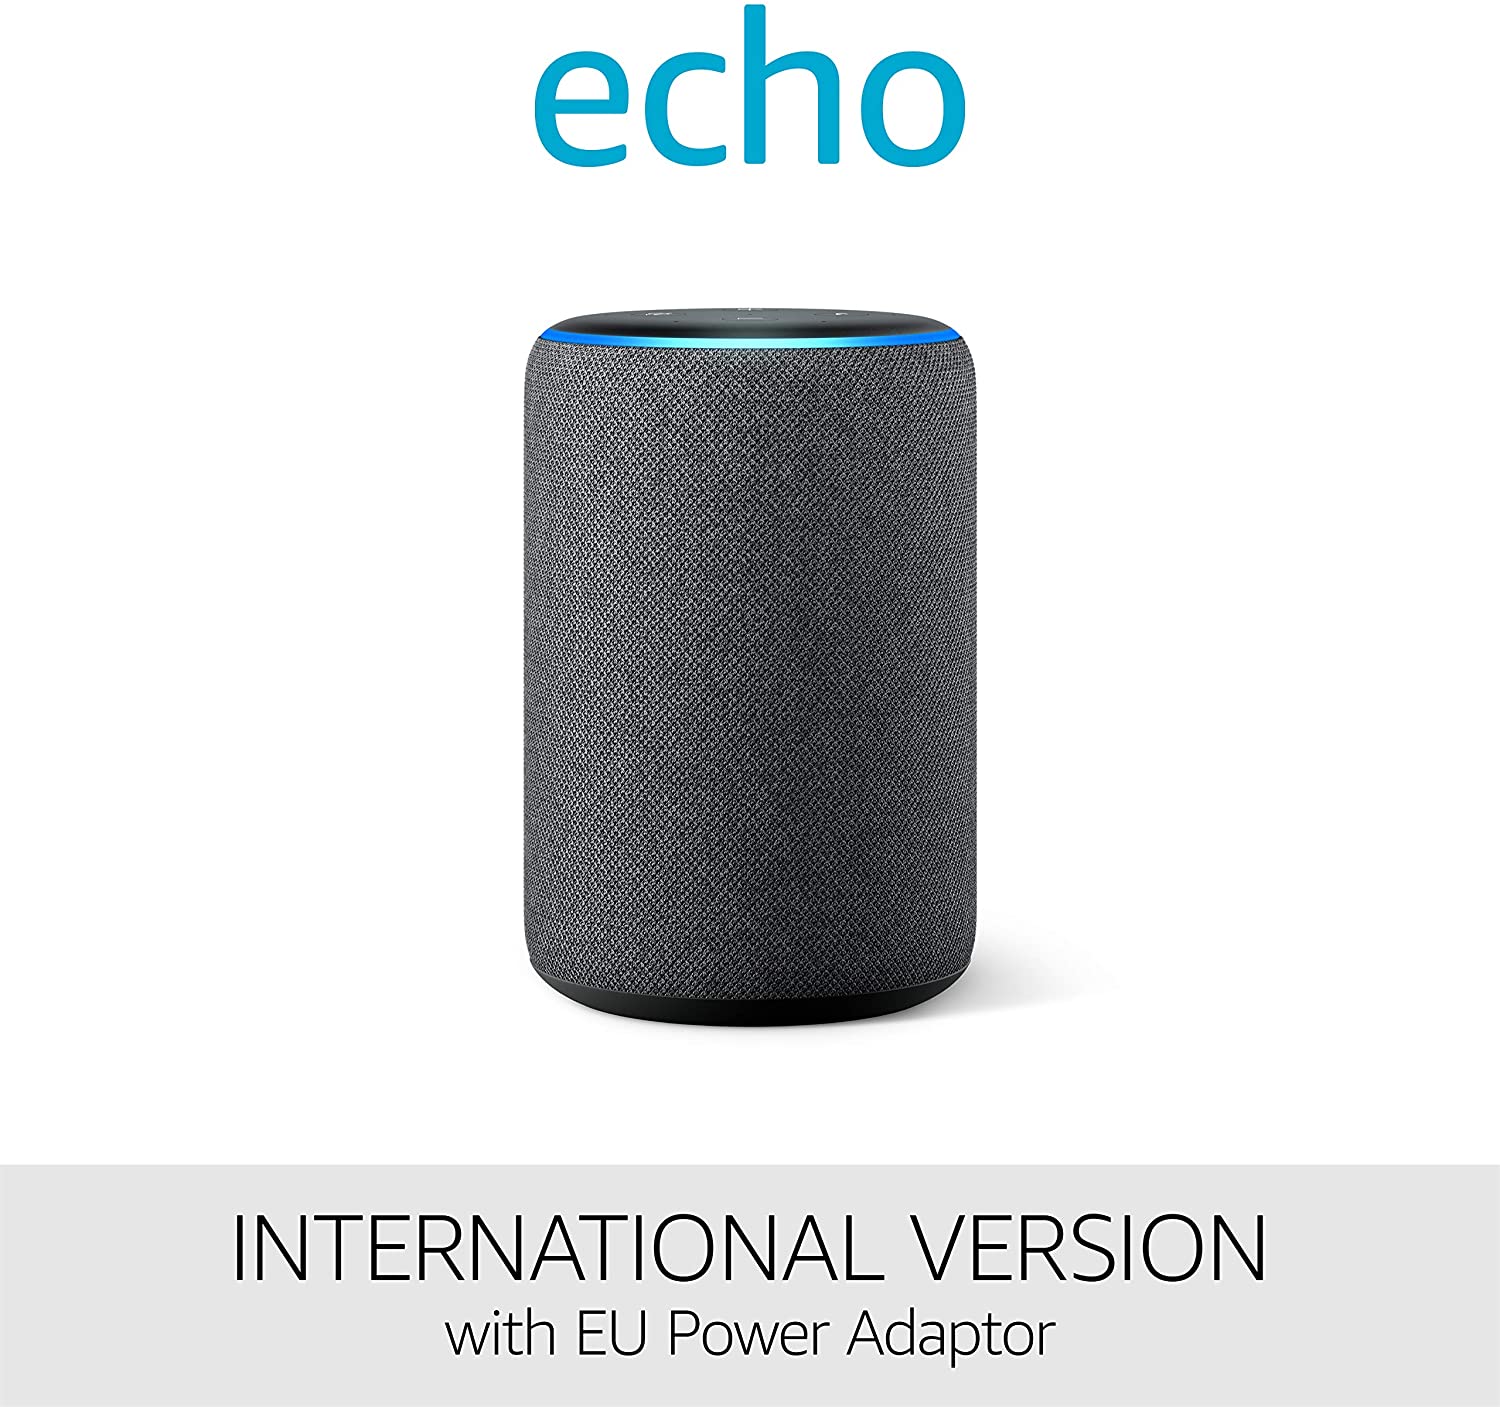 Amazon Echo International Version with EU Power Adaptor